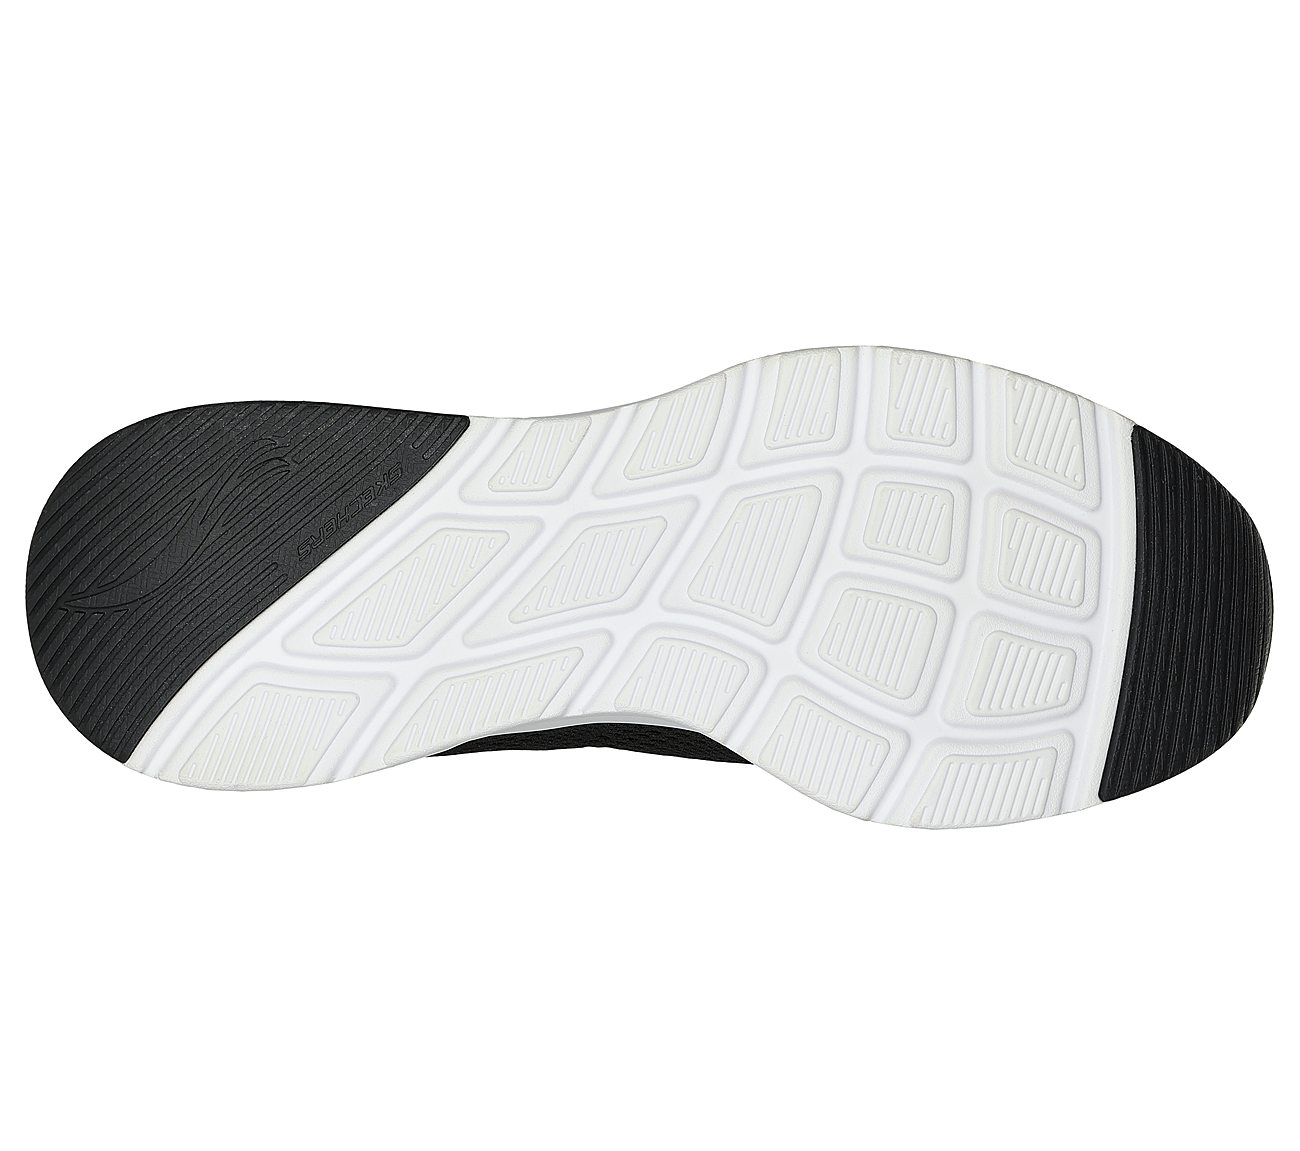 SKECH-AIR COURT, BLACK/WHITE Footwear Bottom View